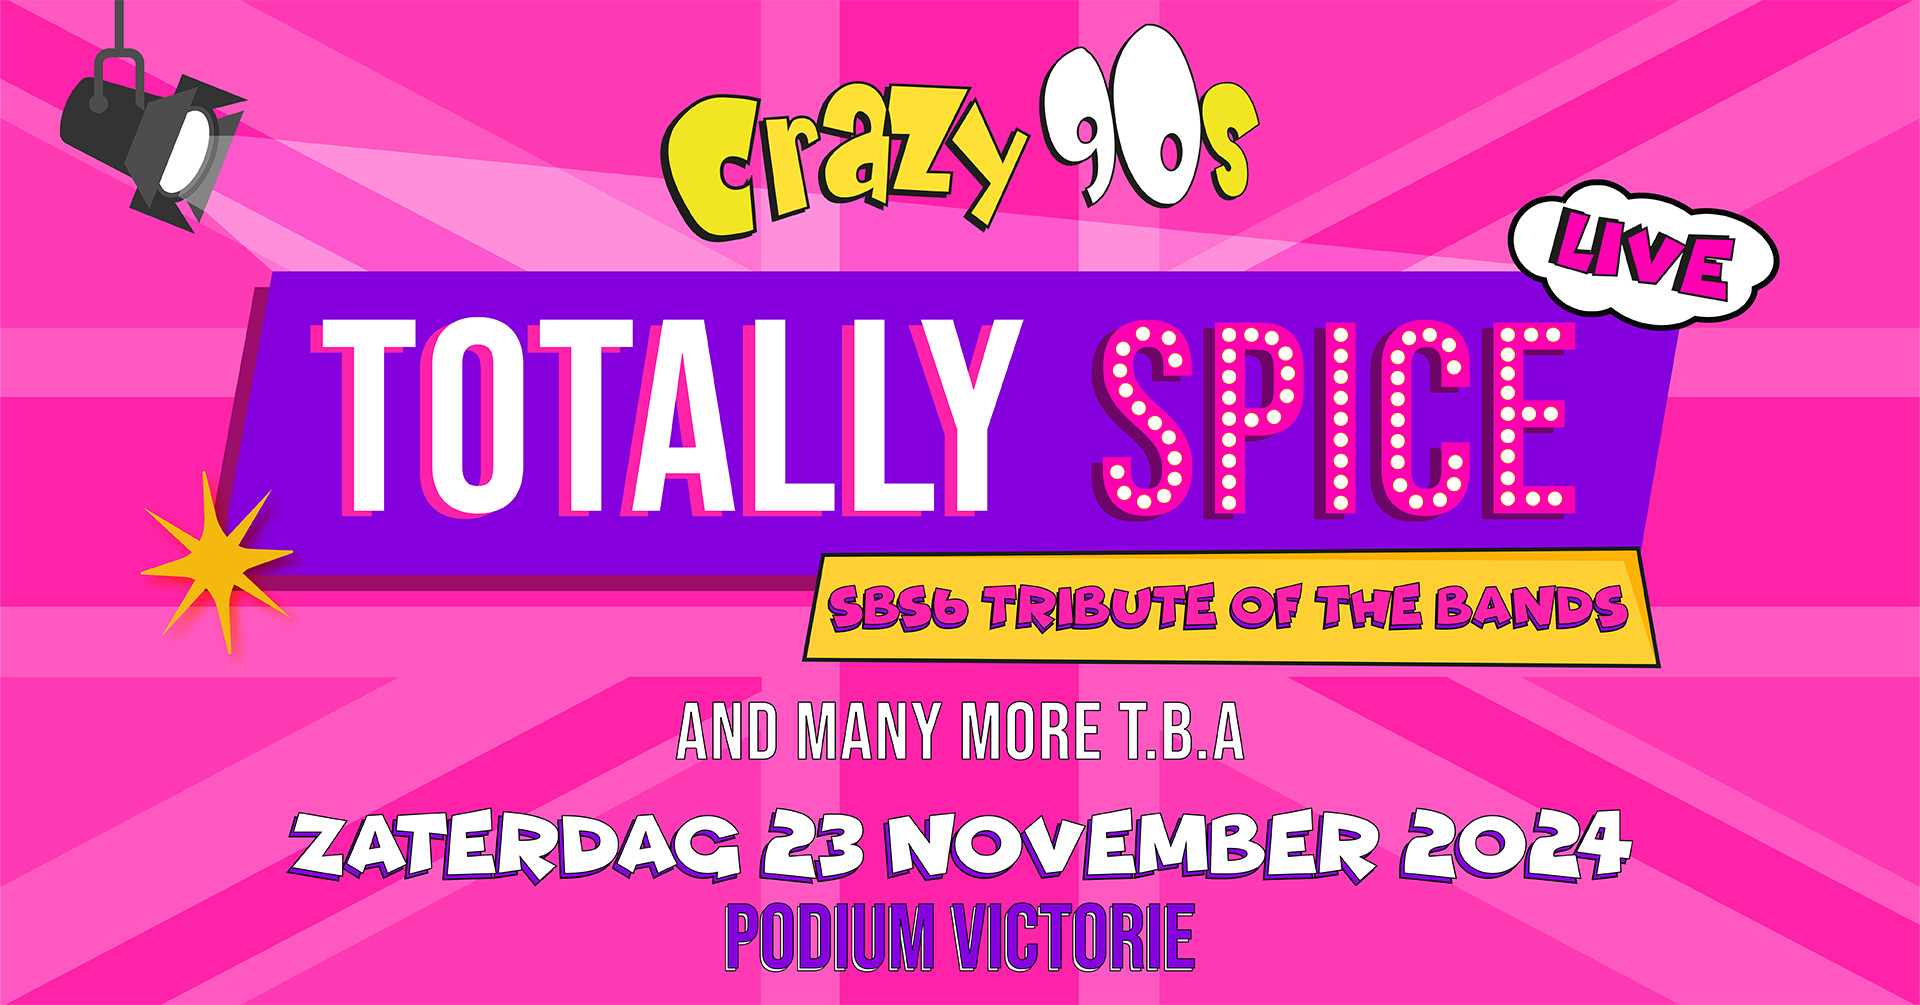 Crazy 90's: Totally Spice bij Podium Victorie